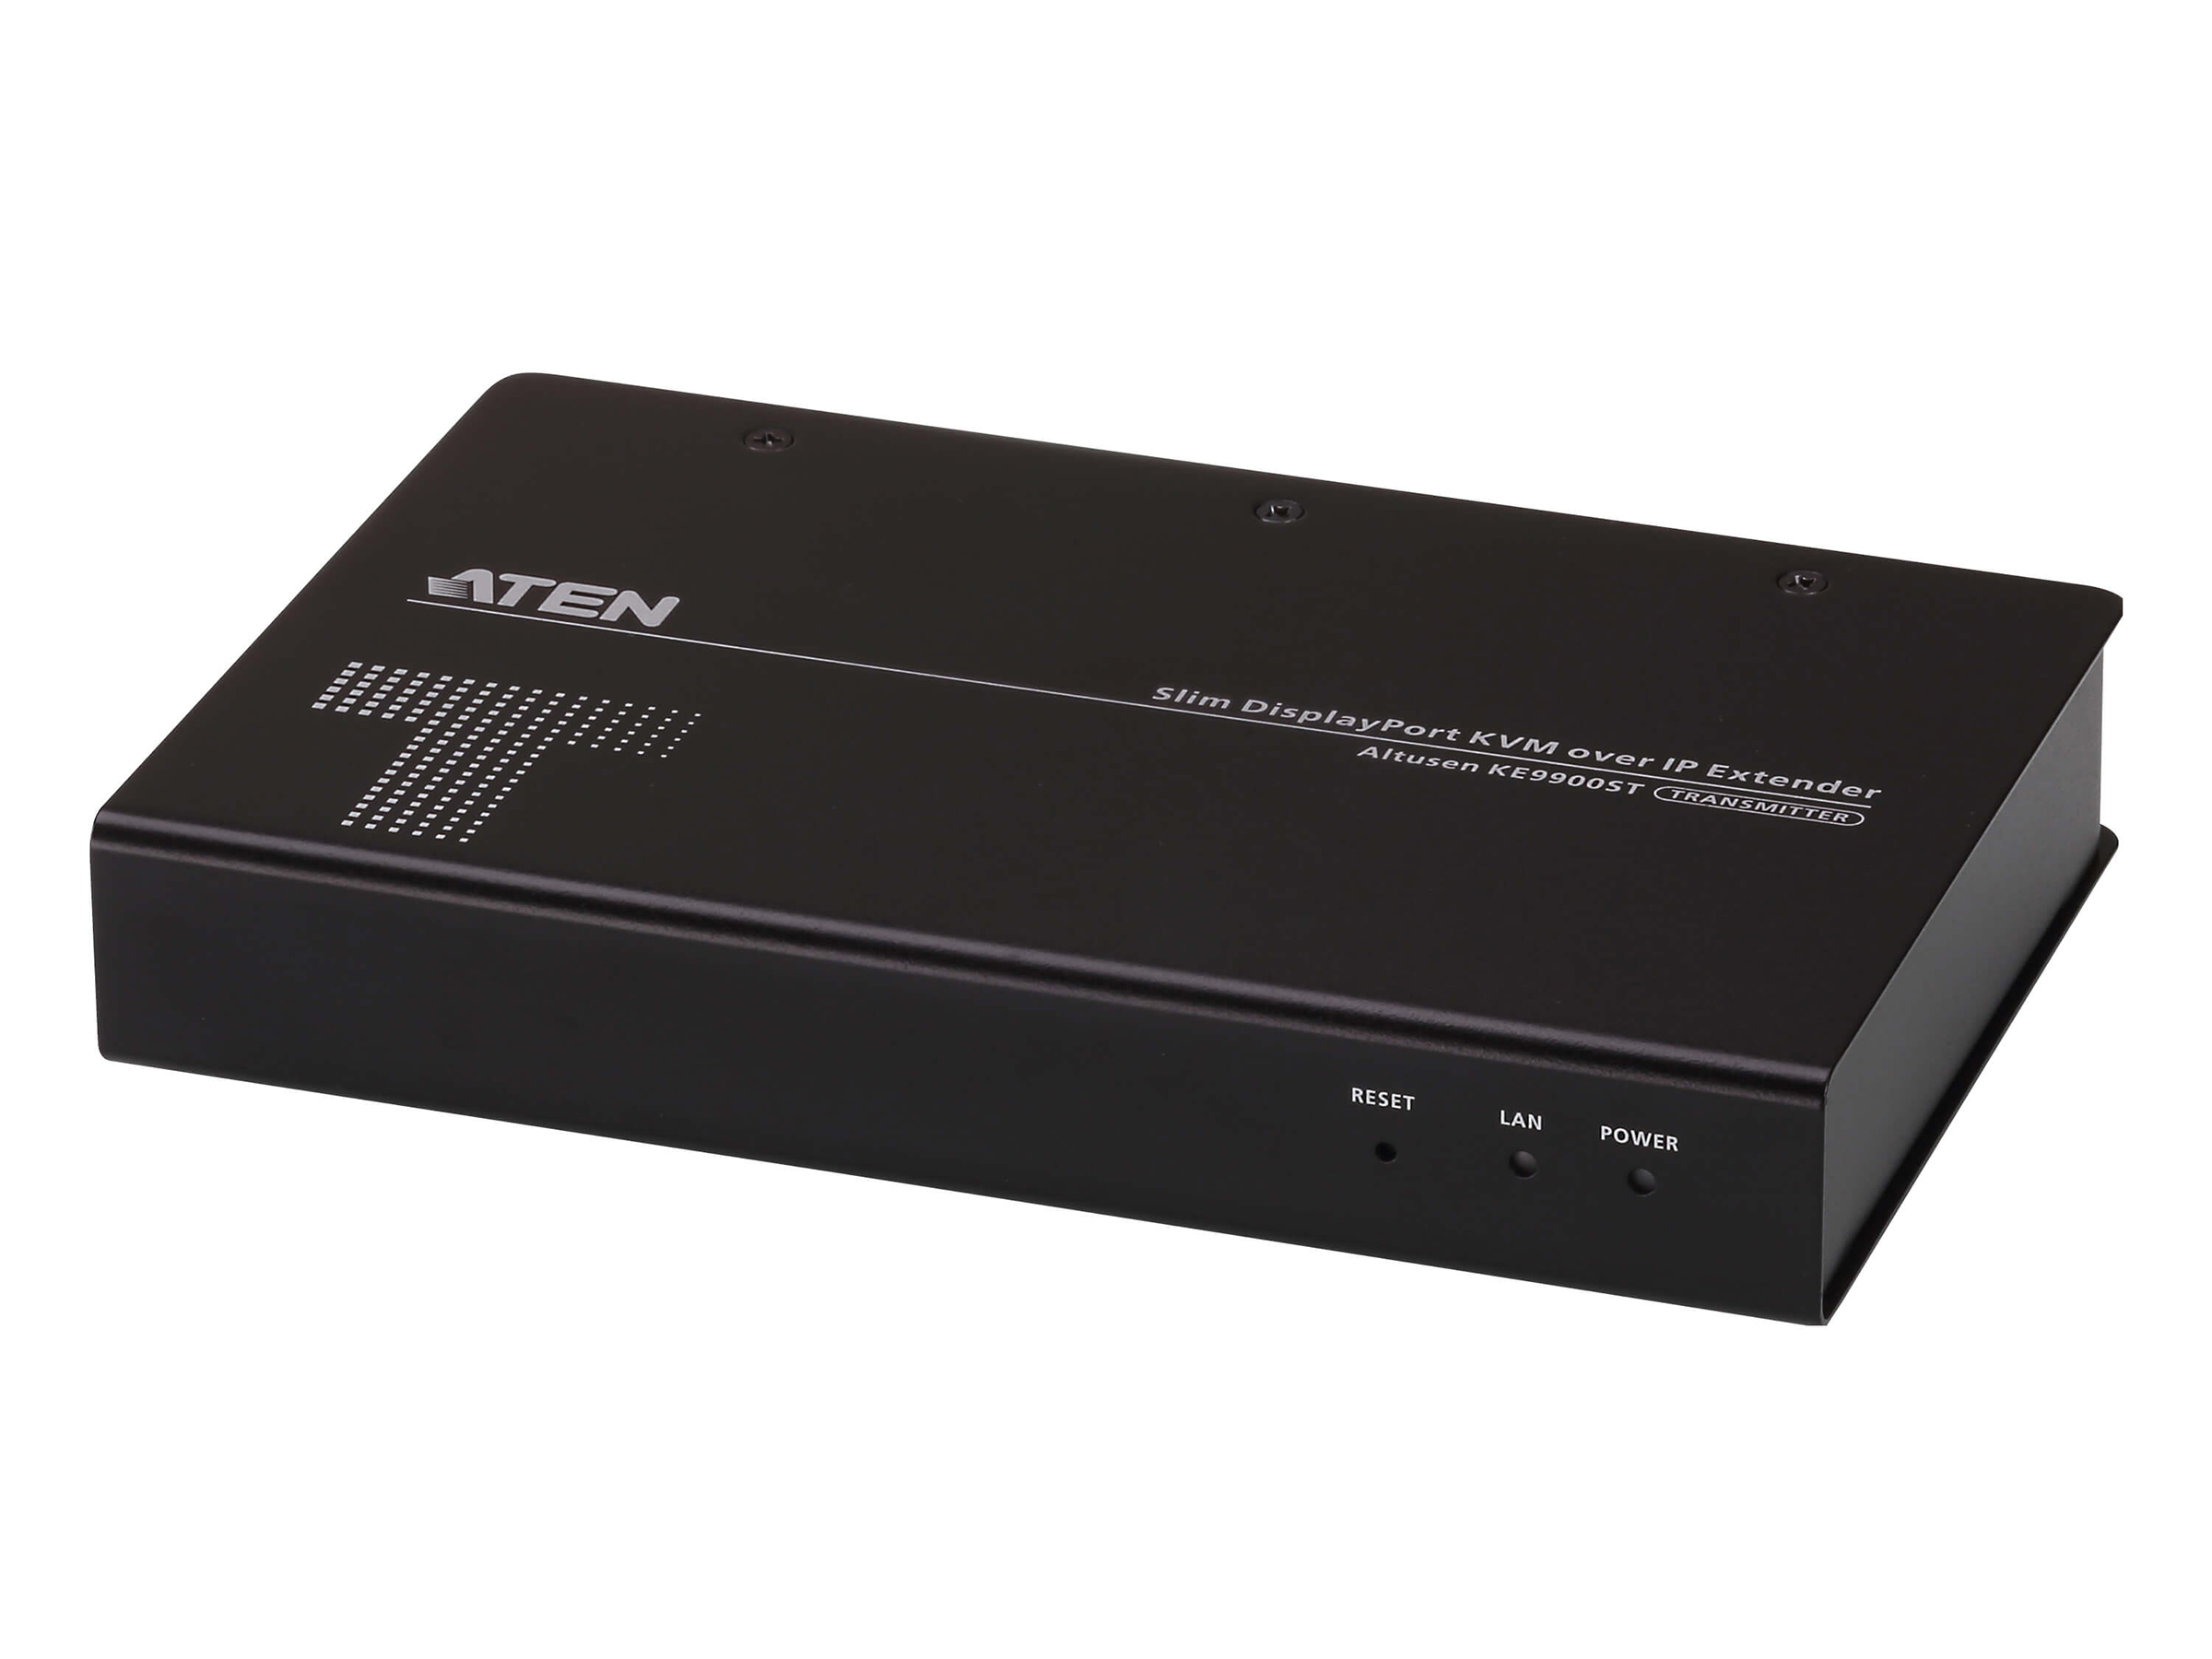 KE9900ST Slim DisplayPort Single Display KVM over IP Extender (Transmitter) by Aten